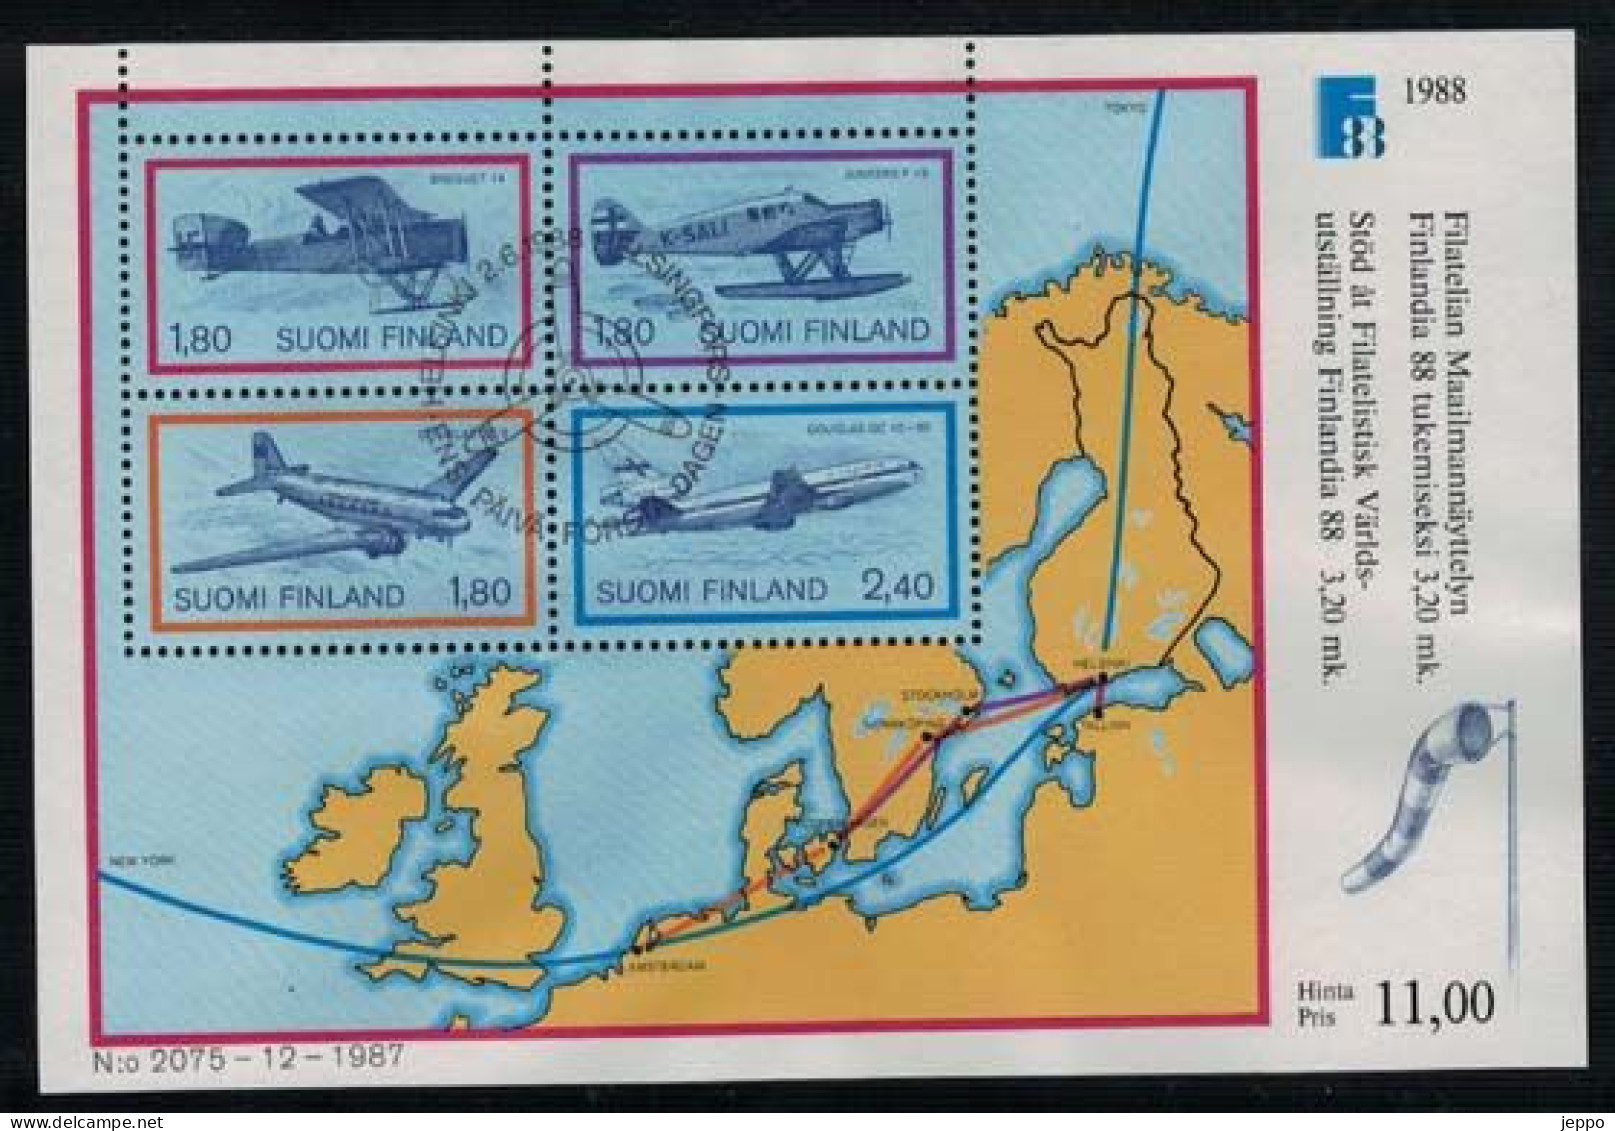 1988 Finland Michel Bl 4, Finlandia 88 Aeroplanes, FD Stamped. - Blocs-feuillets